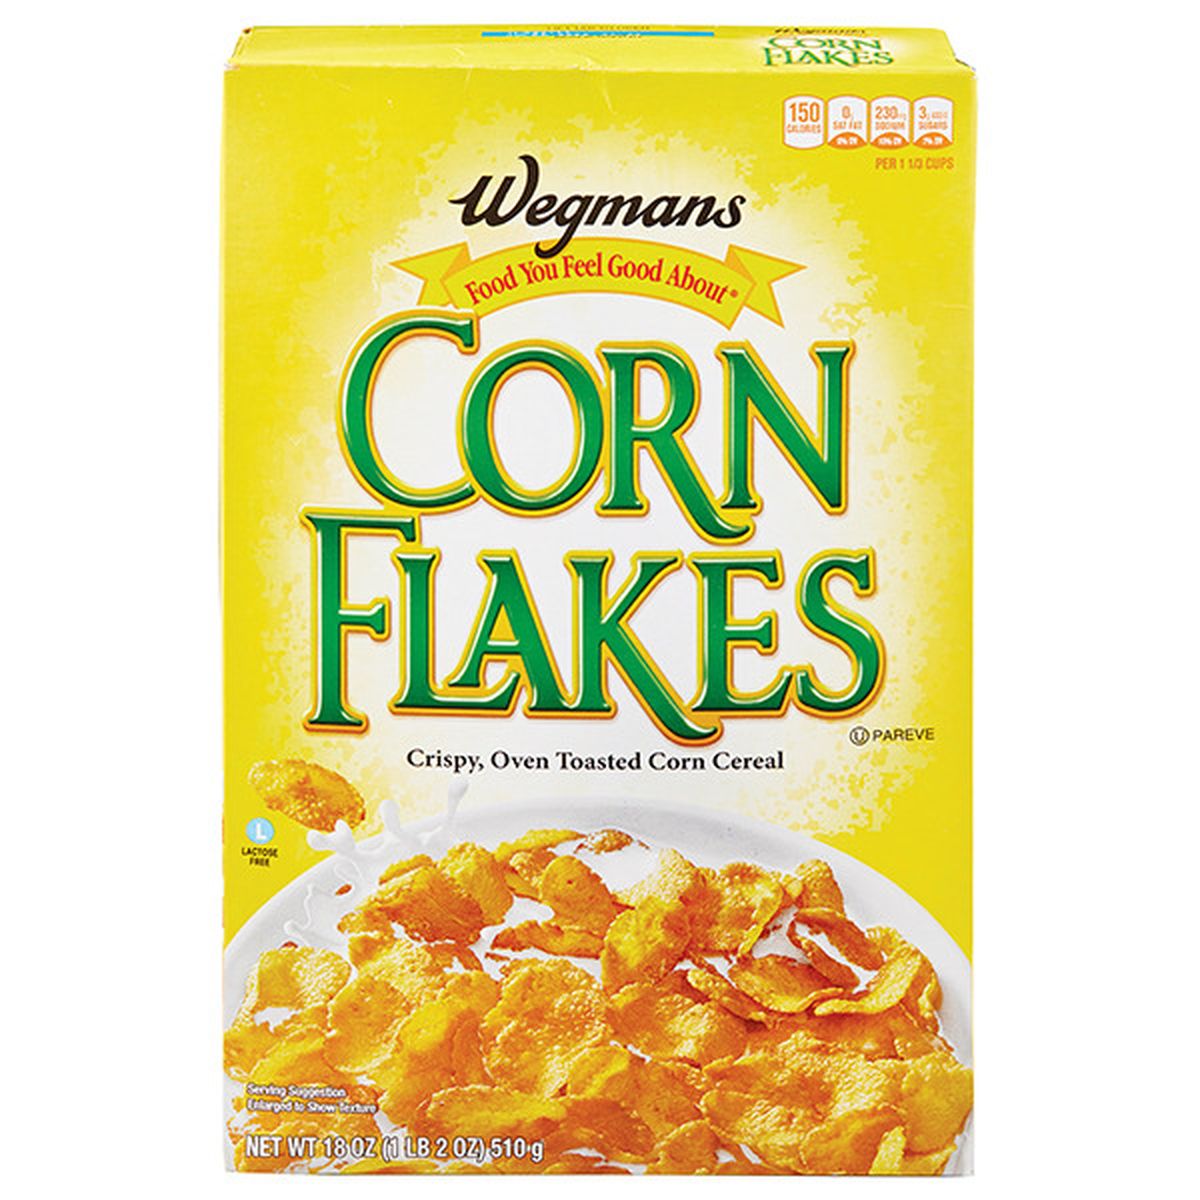 Calories in Wegmans Corn Flakes Cereal